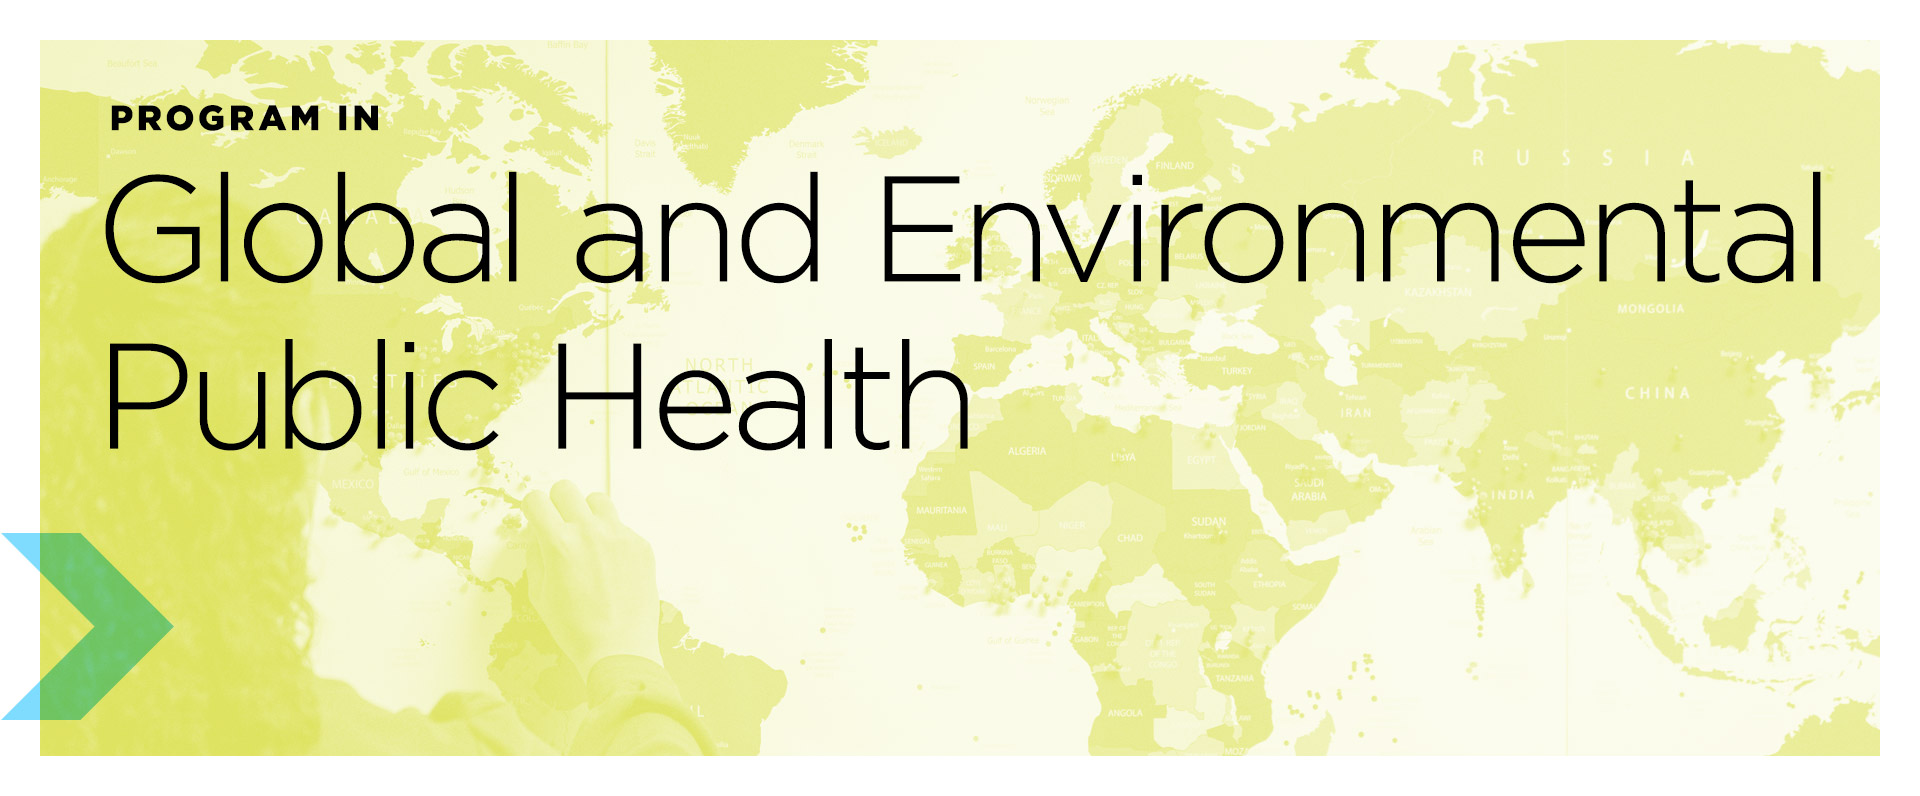 Global and Environmental Public Health Program